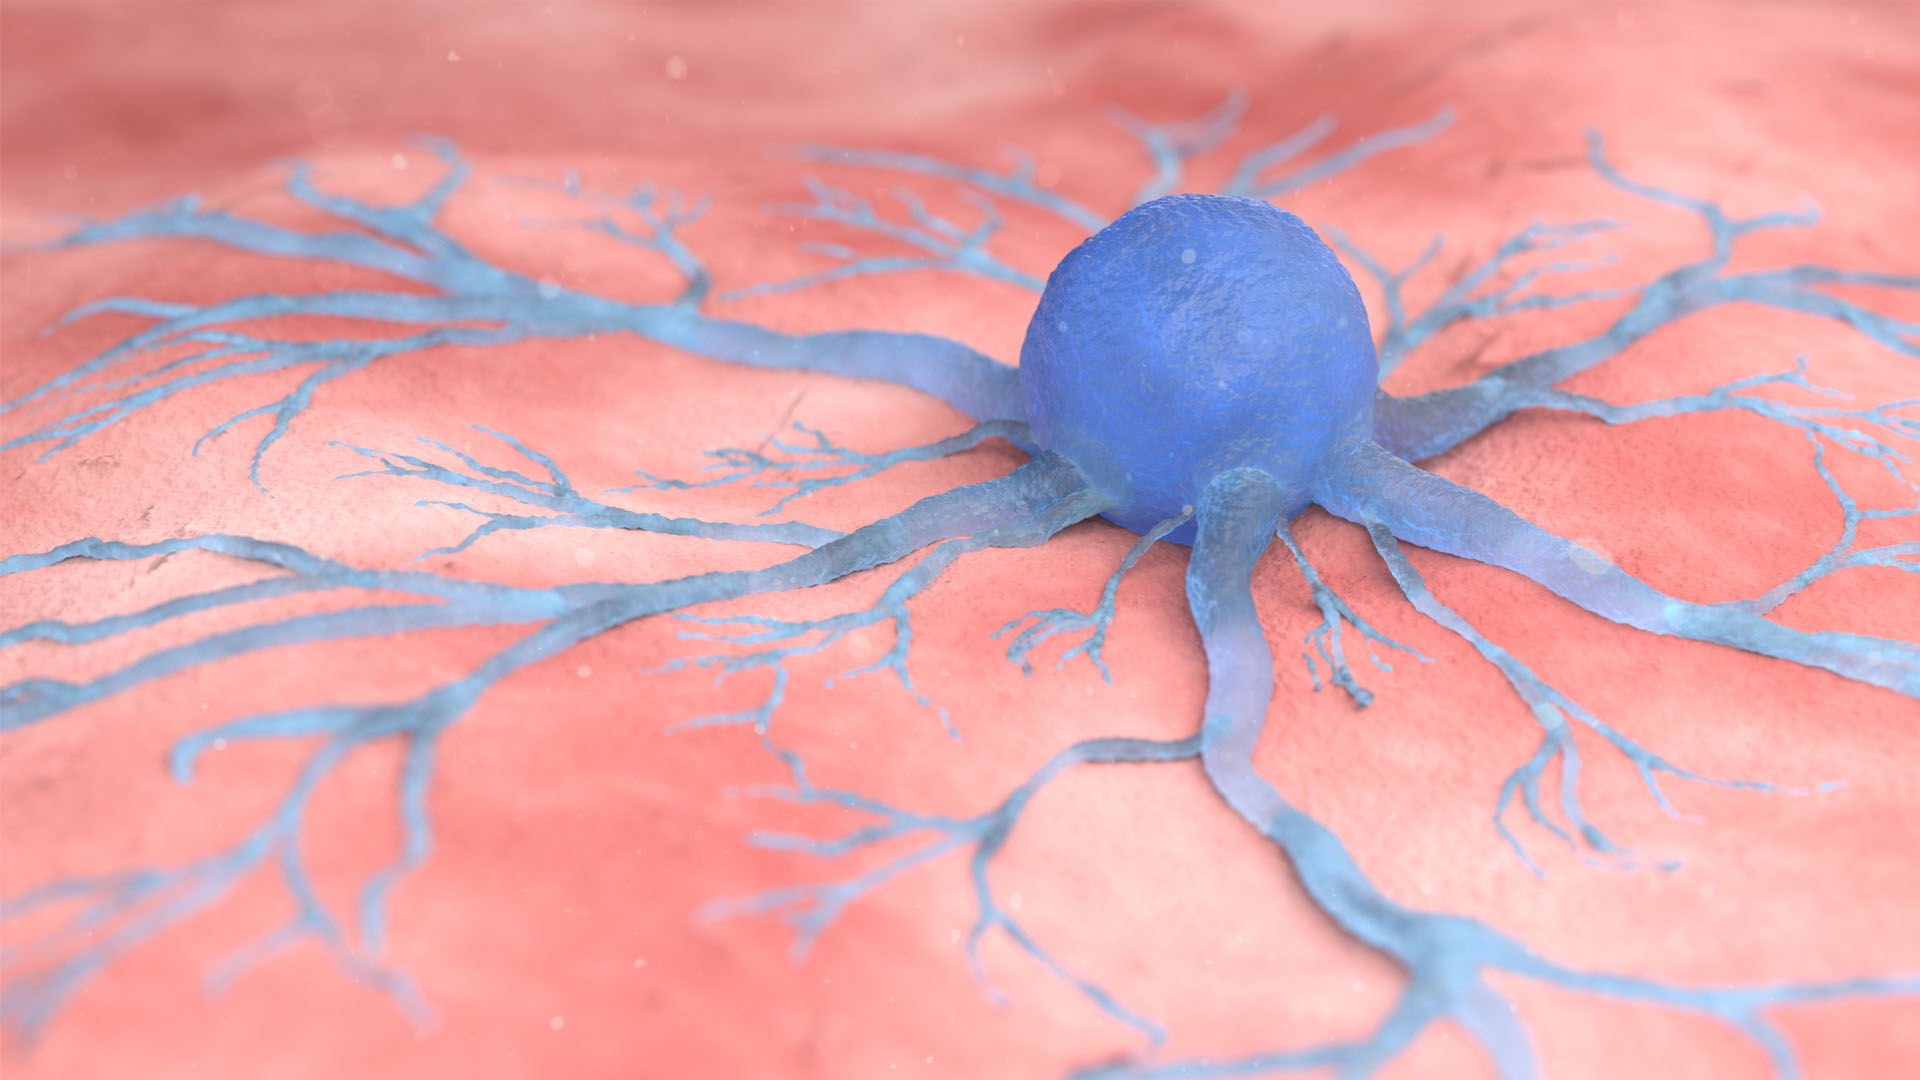 Using Imaging to Understand Cancer Metastasis